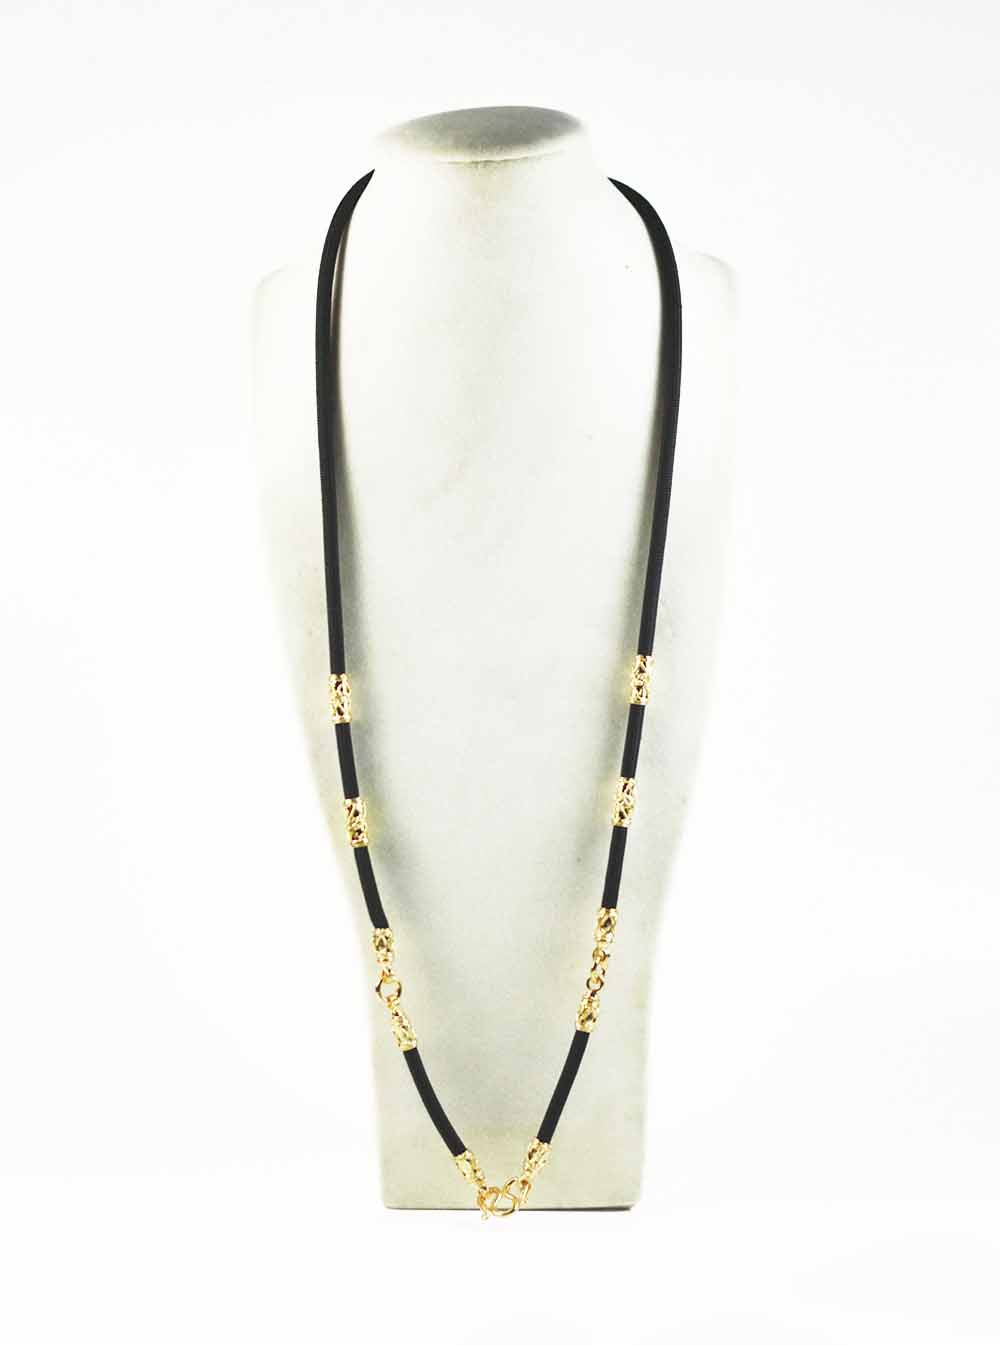 Black Nylon String Three Hooks Amulet Necklace with Gold Tubes (69cm)